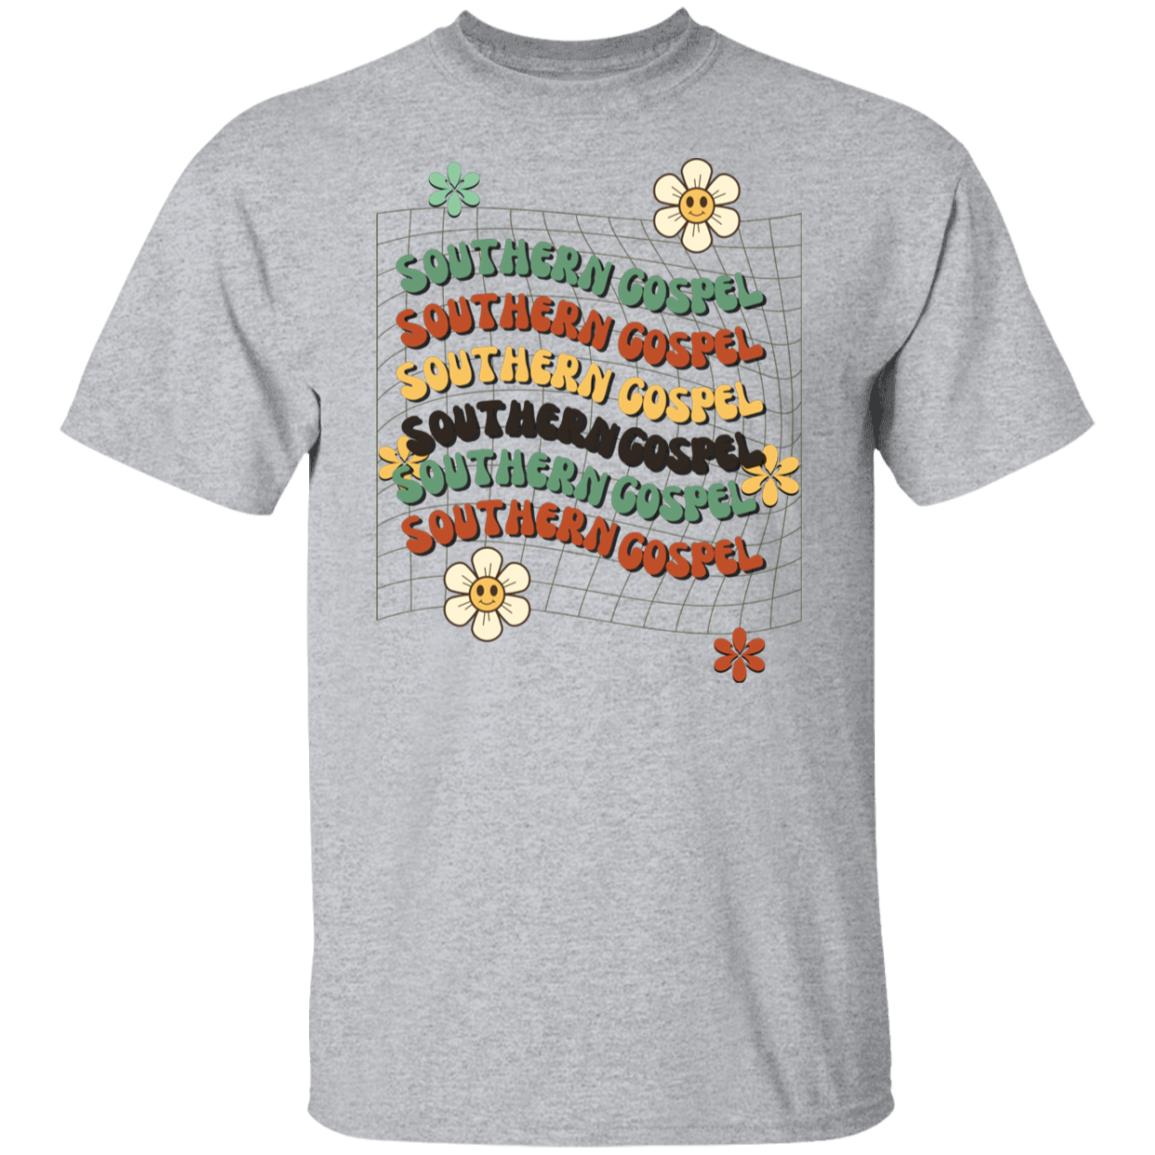 Southern Gospel - Southern Gospel T-Shirt